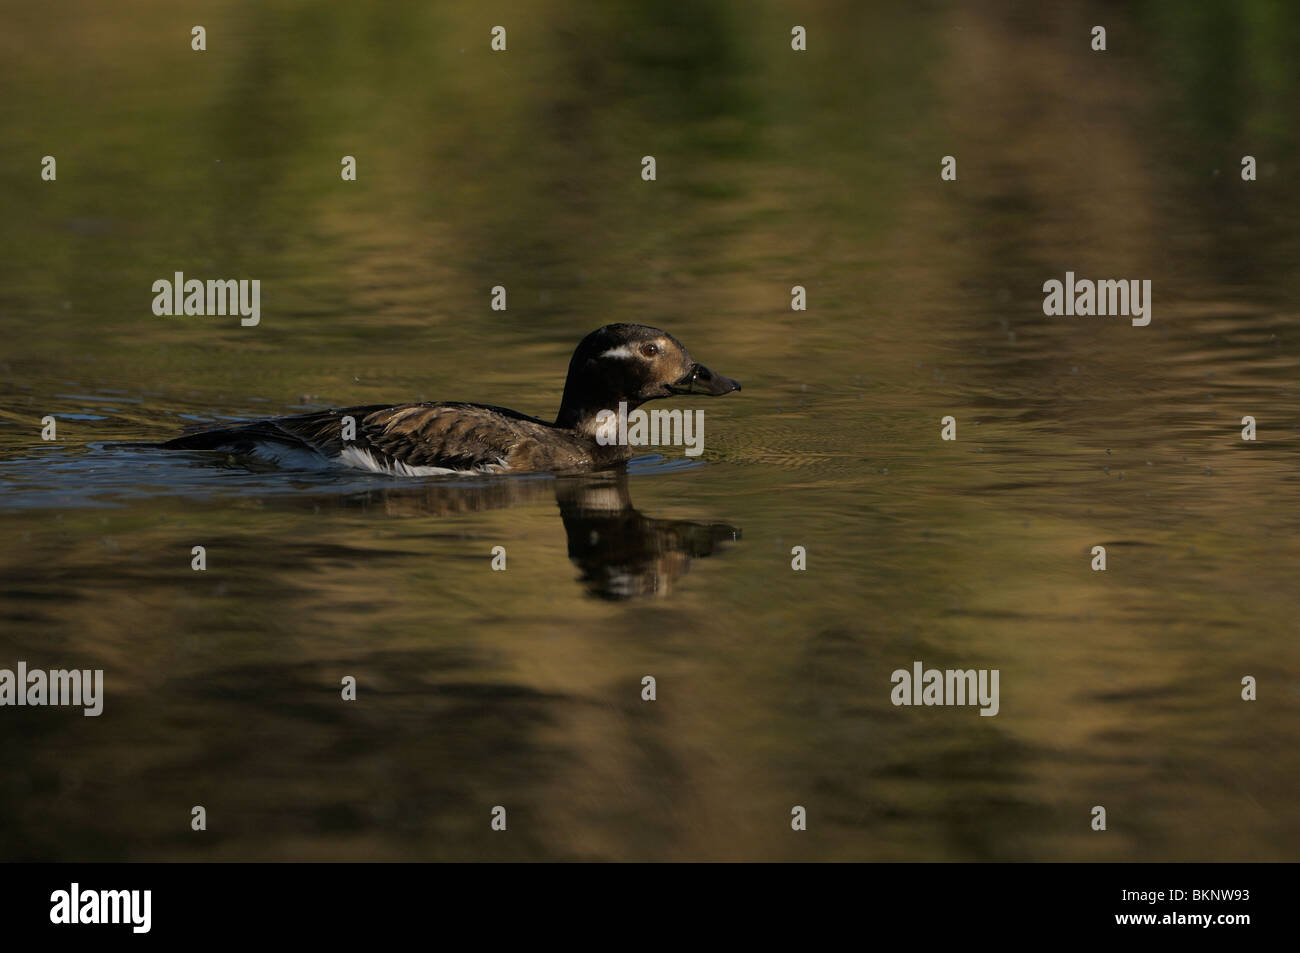 Zwemmende vrouw IJseend in broedkleed; Swimmingfemale Long-tailed Duck in breeding plumage Stock Photo